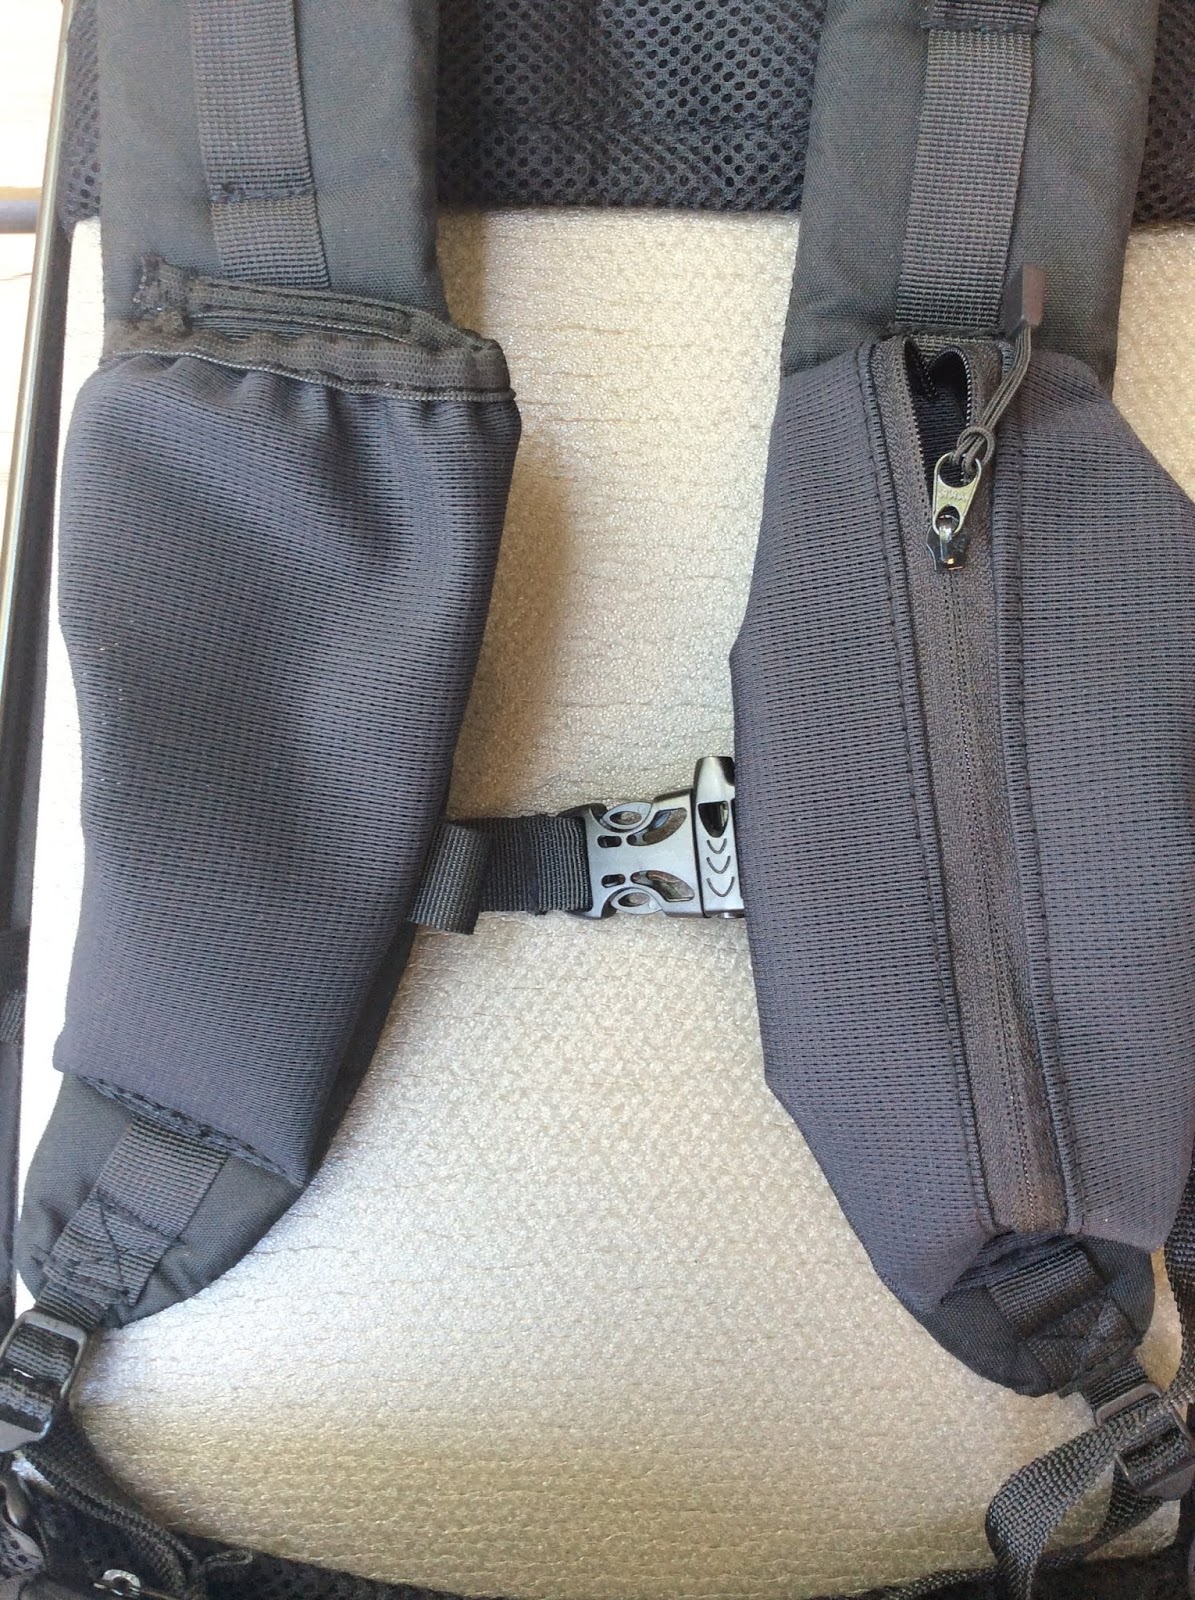 KS ultralight gear: KS packs